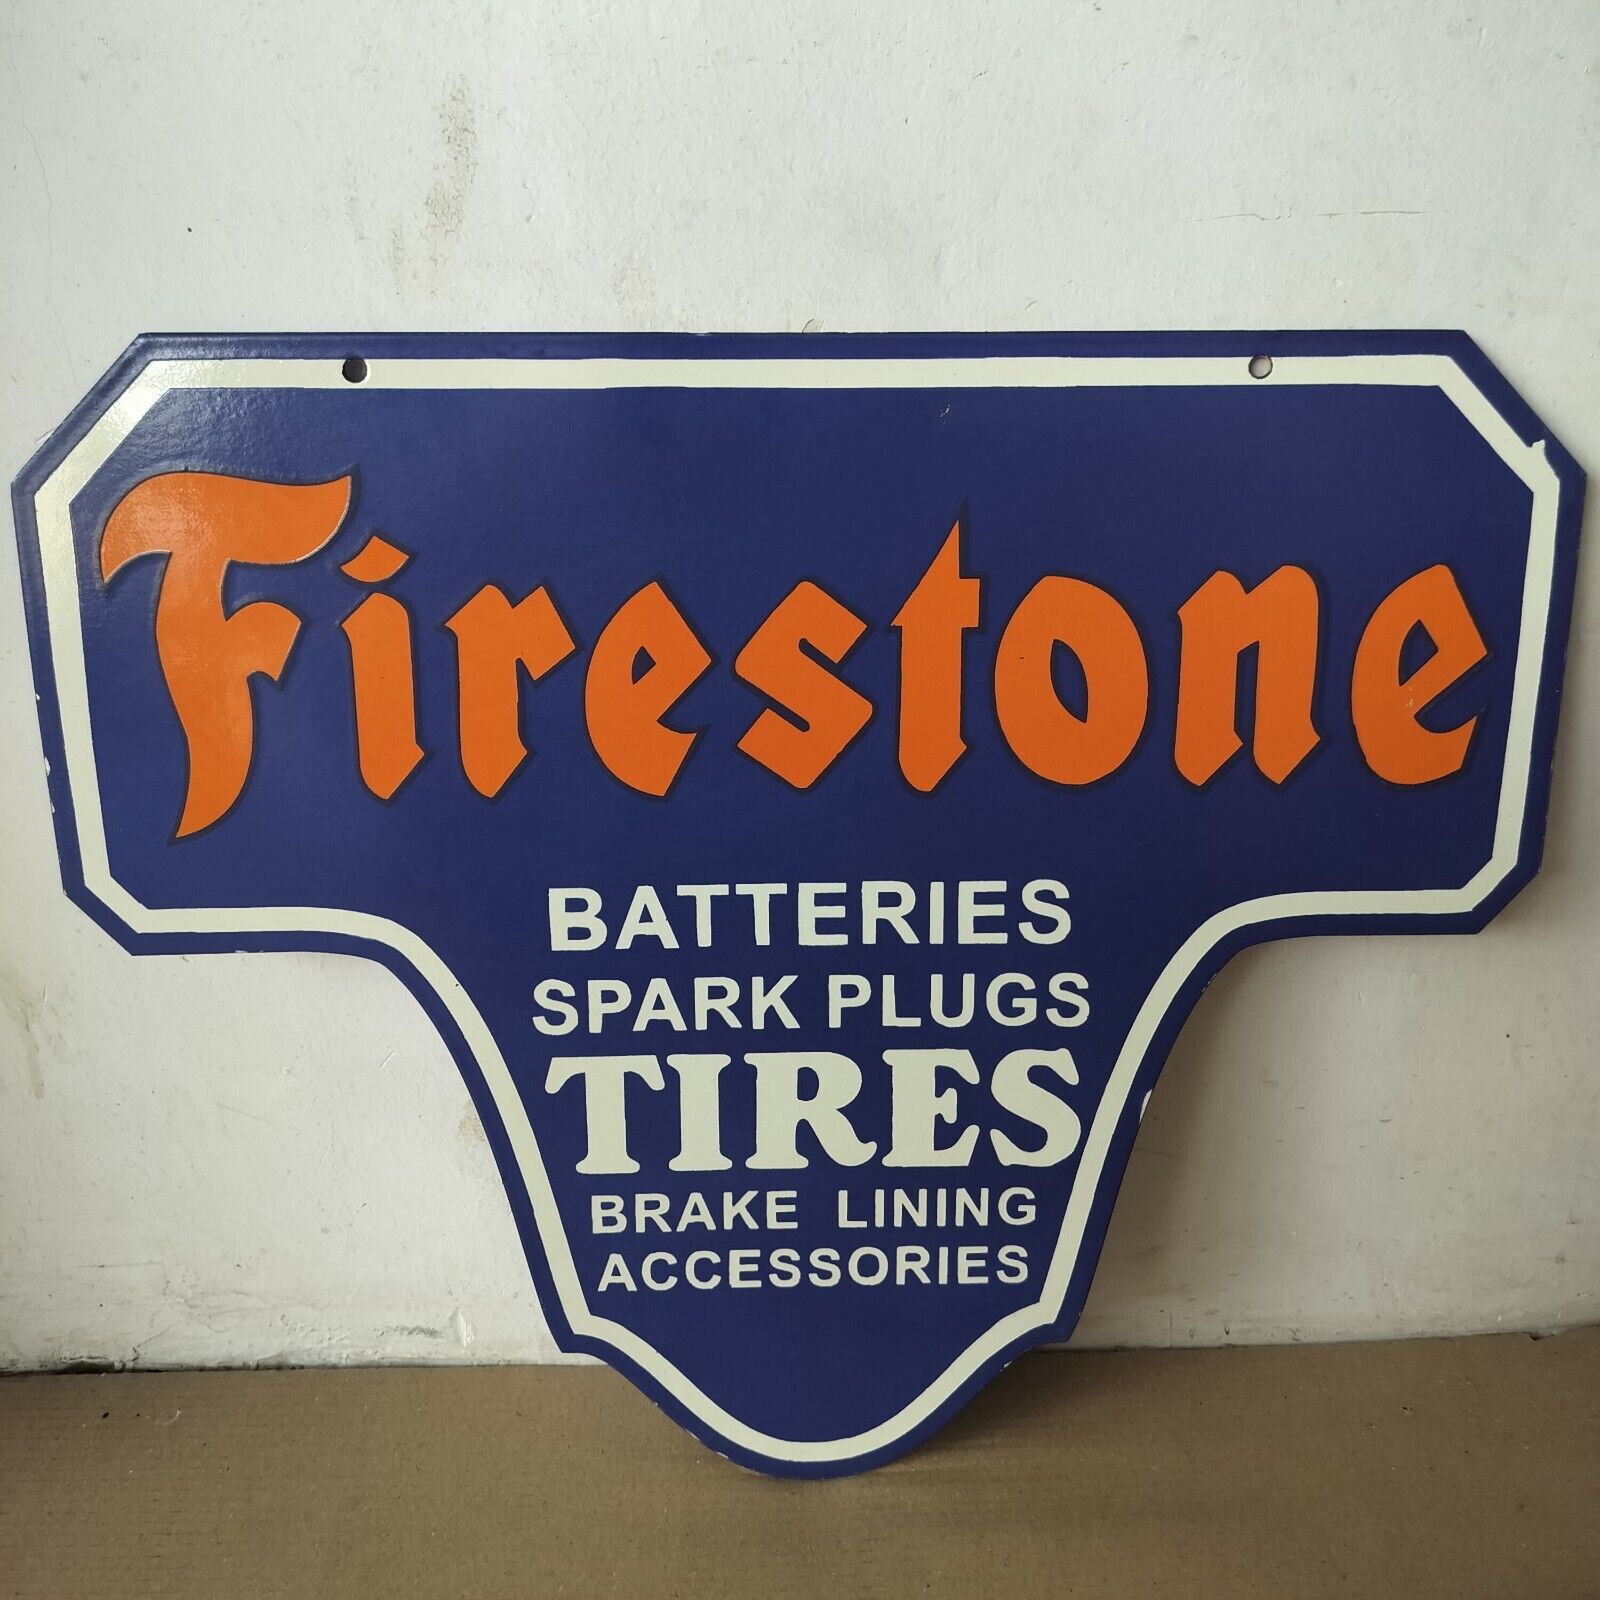 Firestone Batteries spark Plugs Tires Porcelain Enamel Sign  24x20 Inches 2 Side